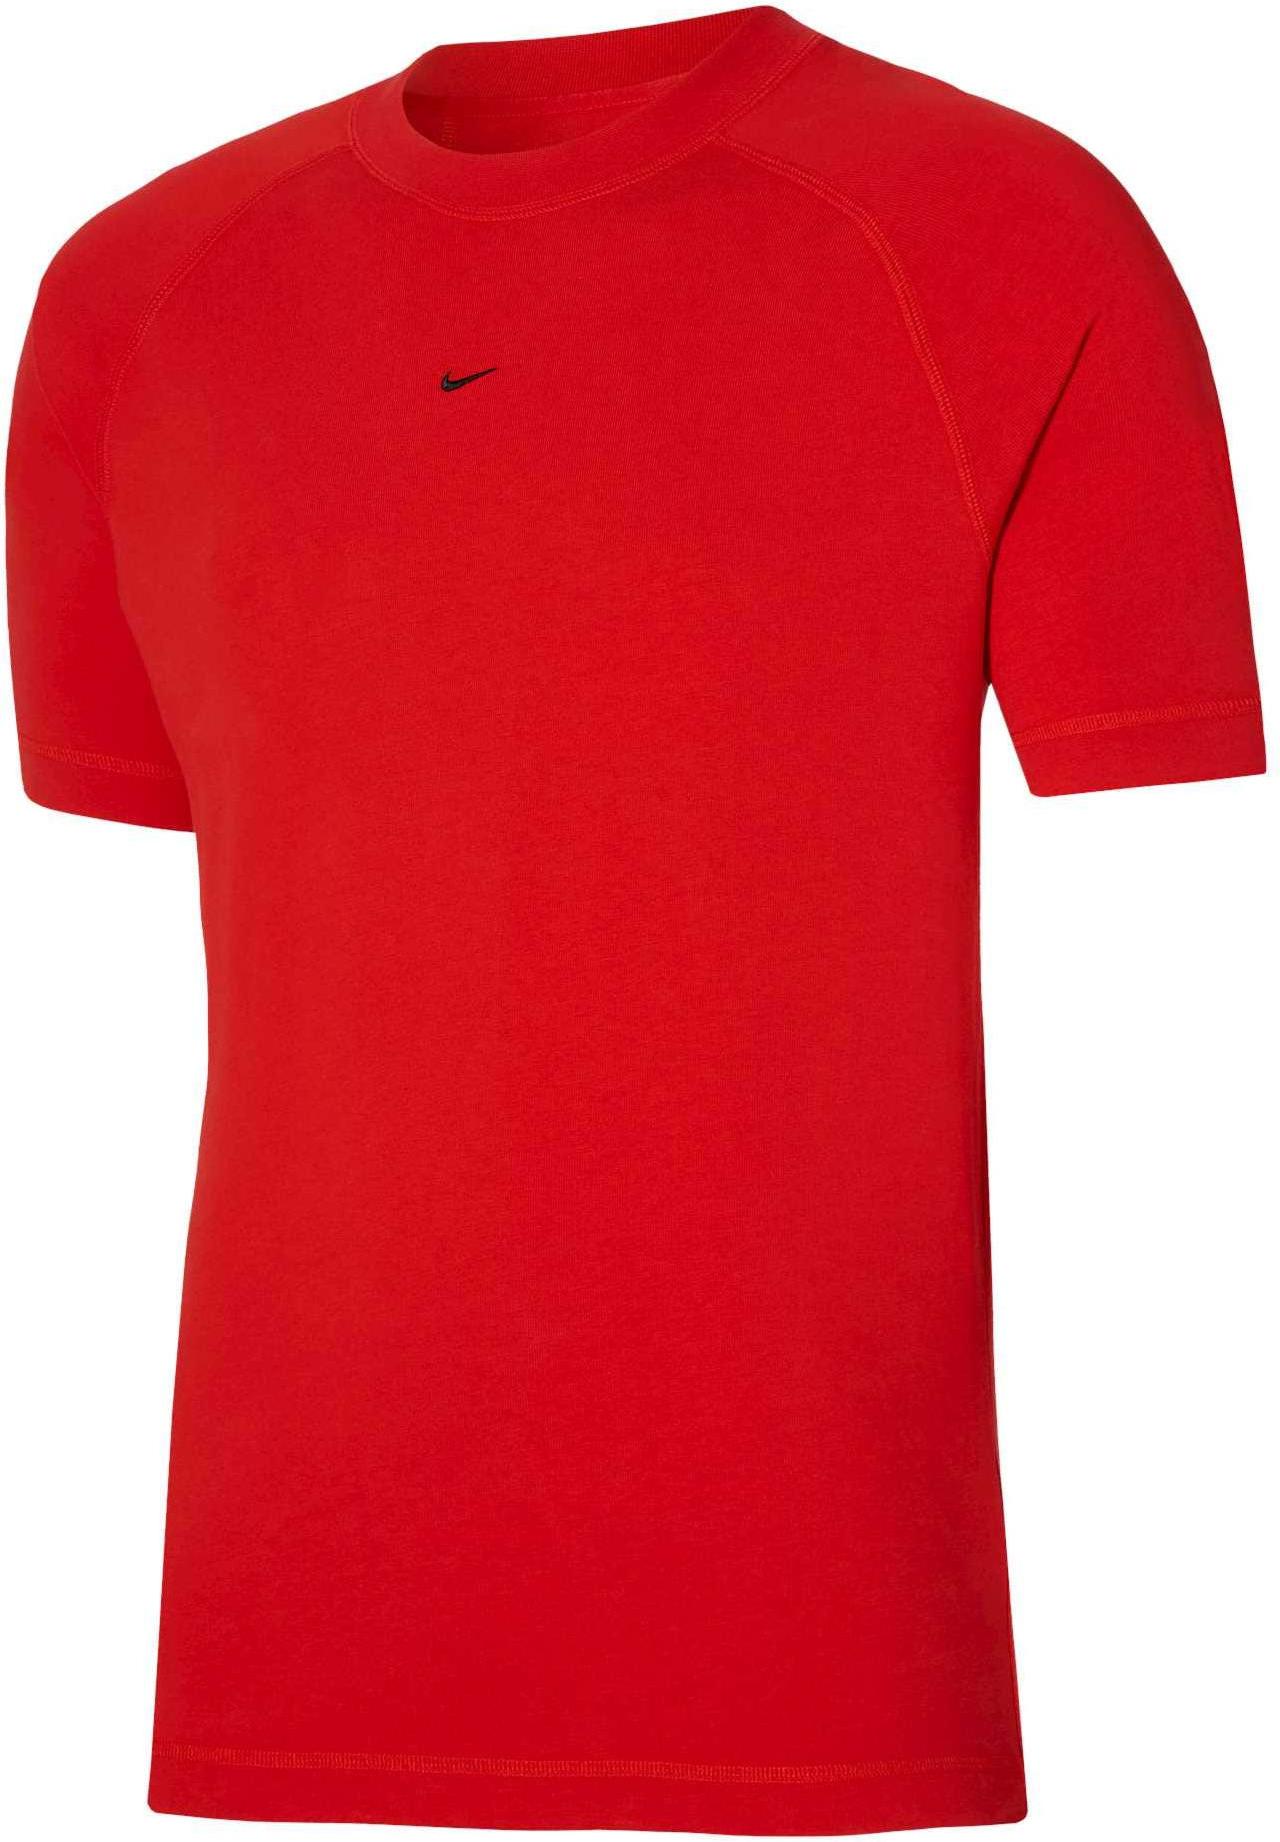 T-shirt Nike code Strike 22 Express Top S/S